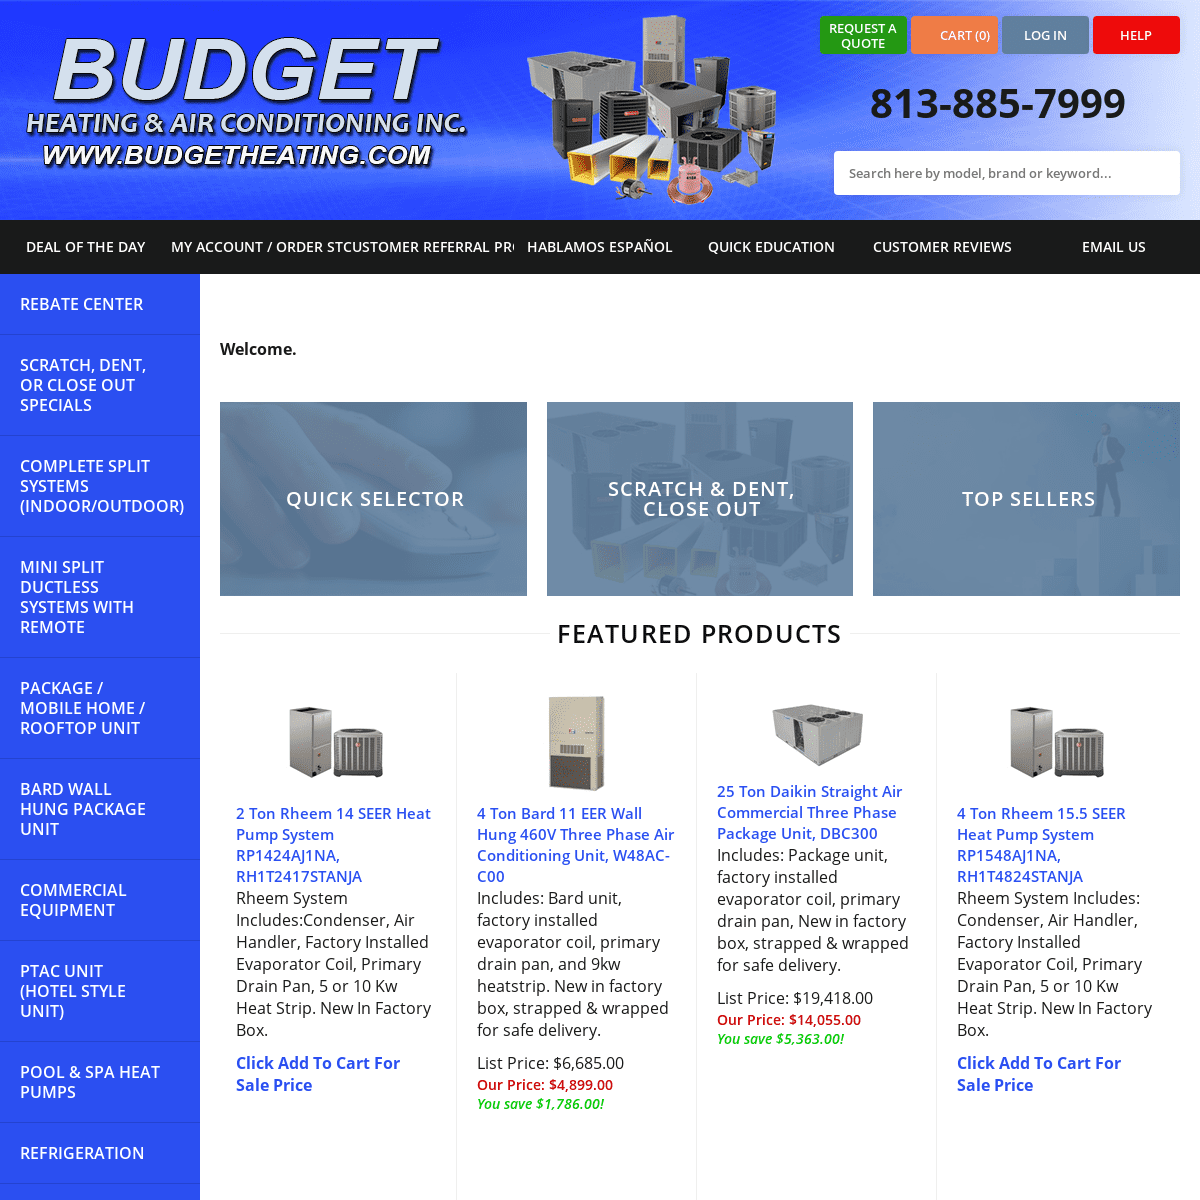 A complete backup of https://budgetheating.com